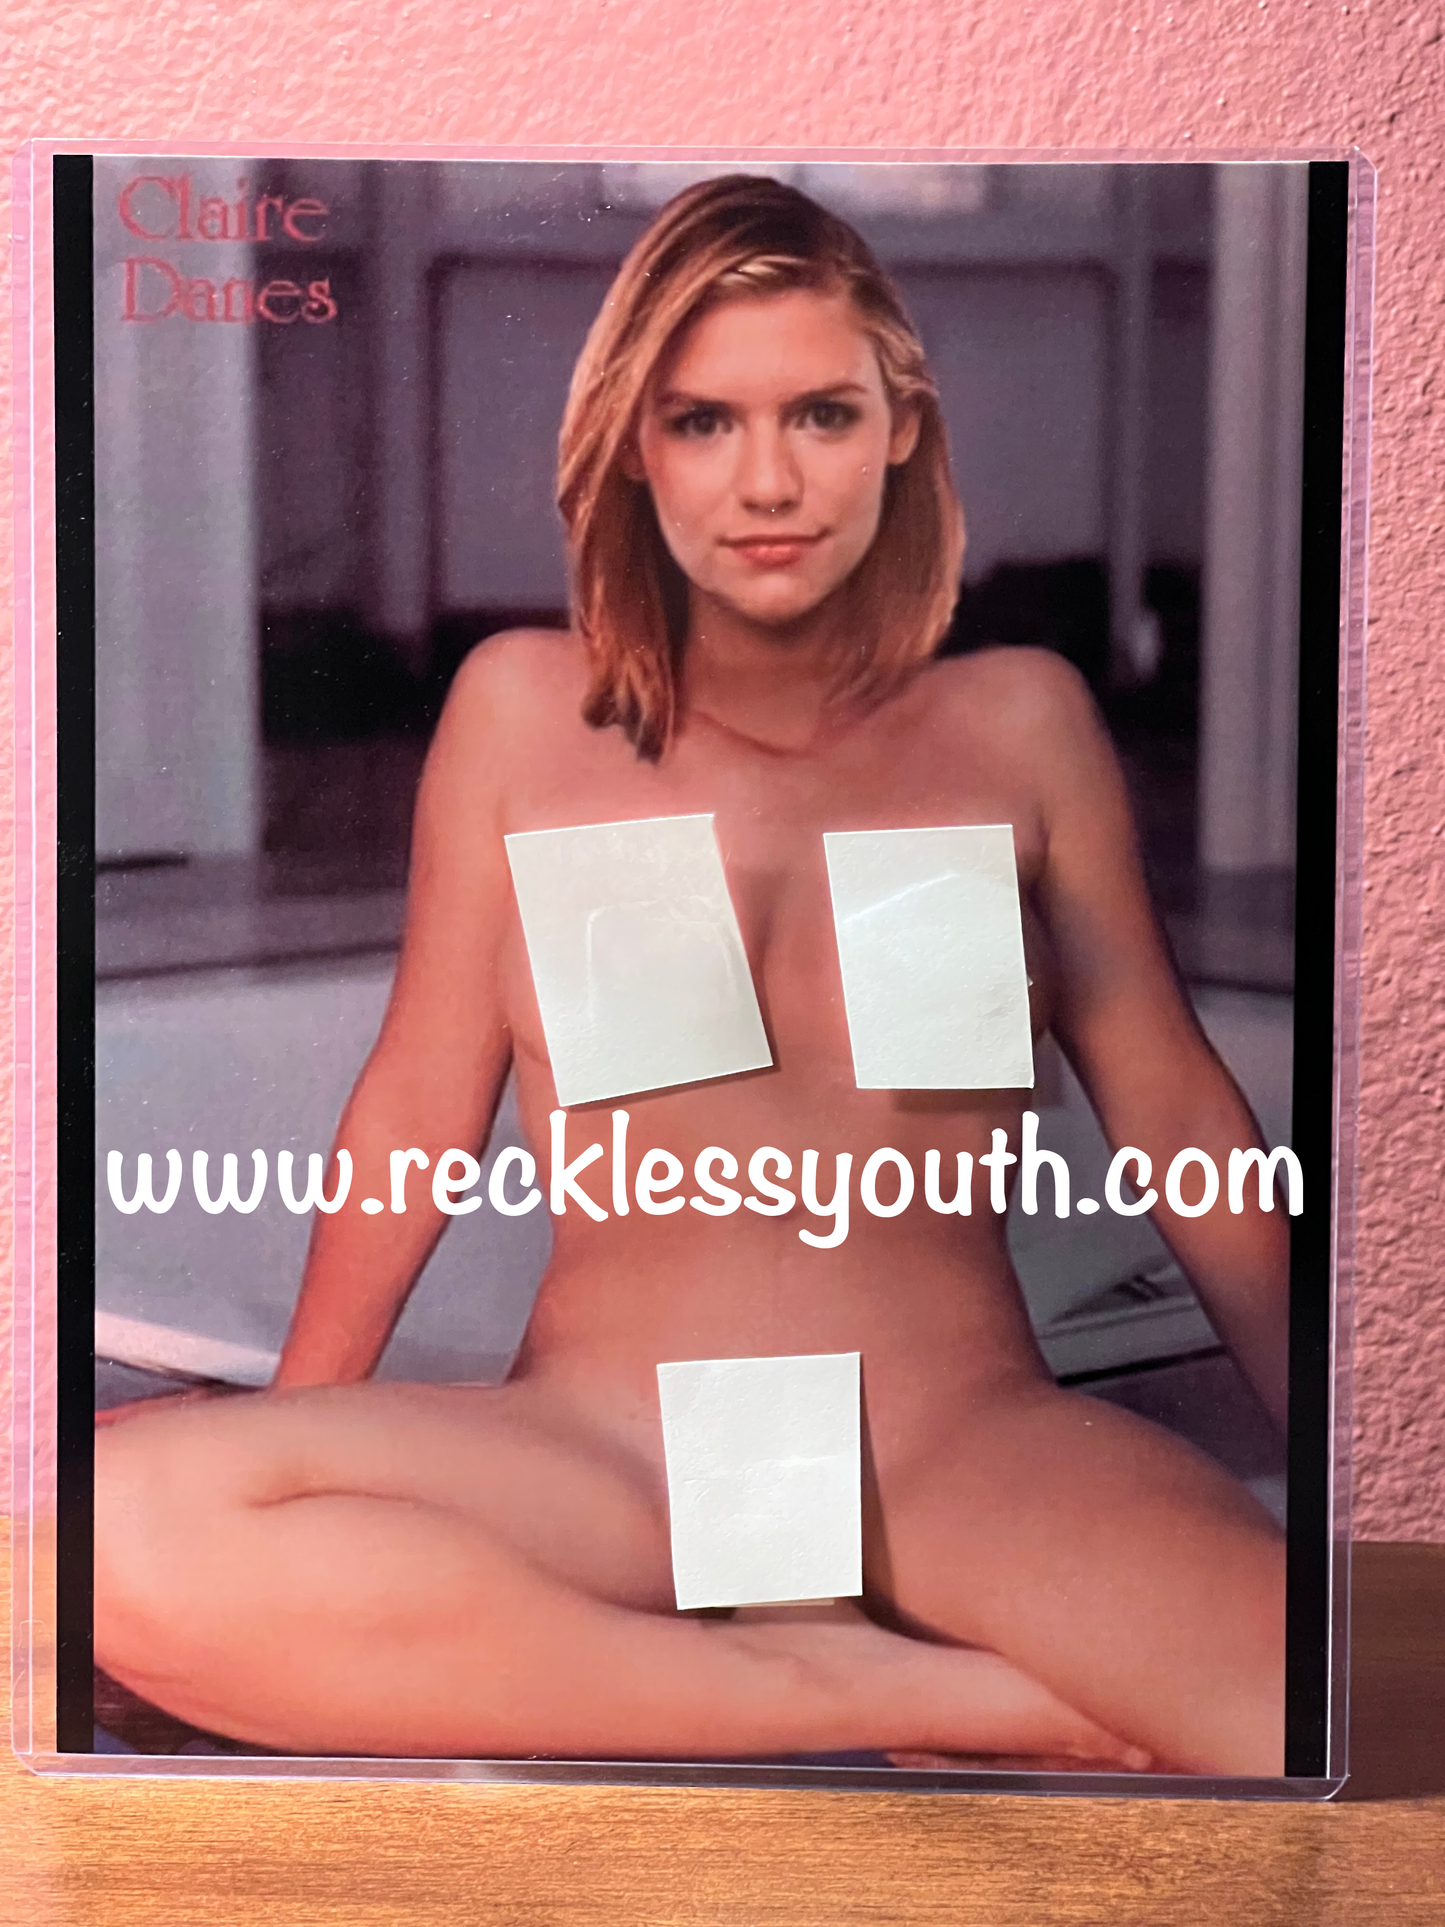 Claire Danes 001 Celebrity Nude 8 x 10 Photo